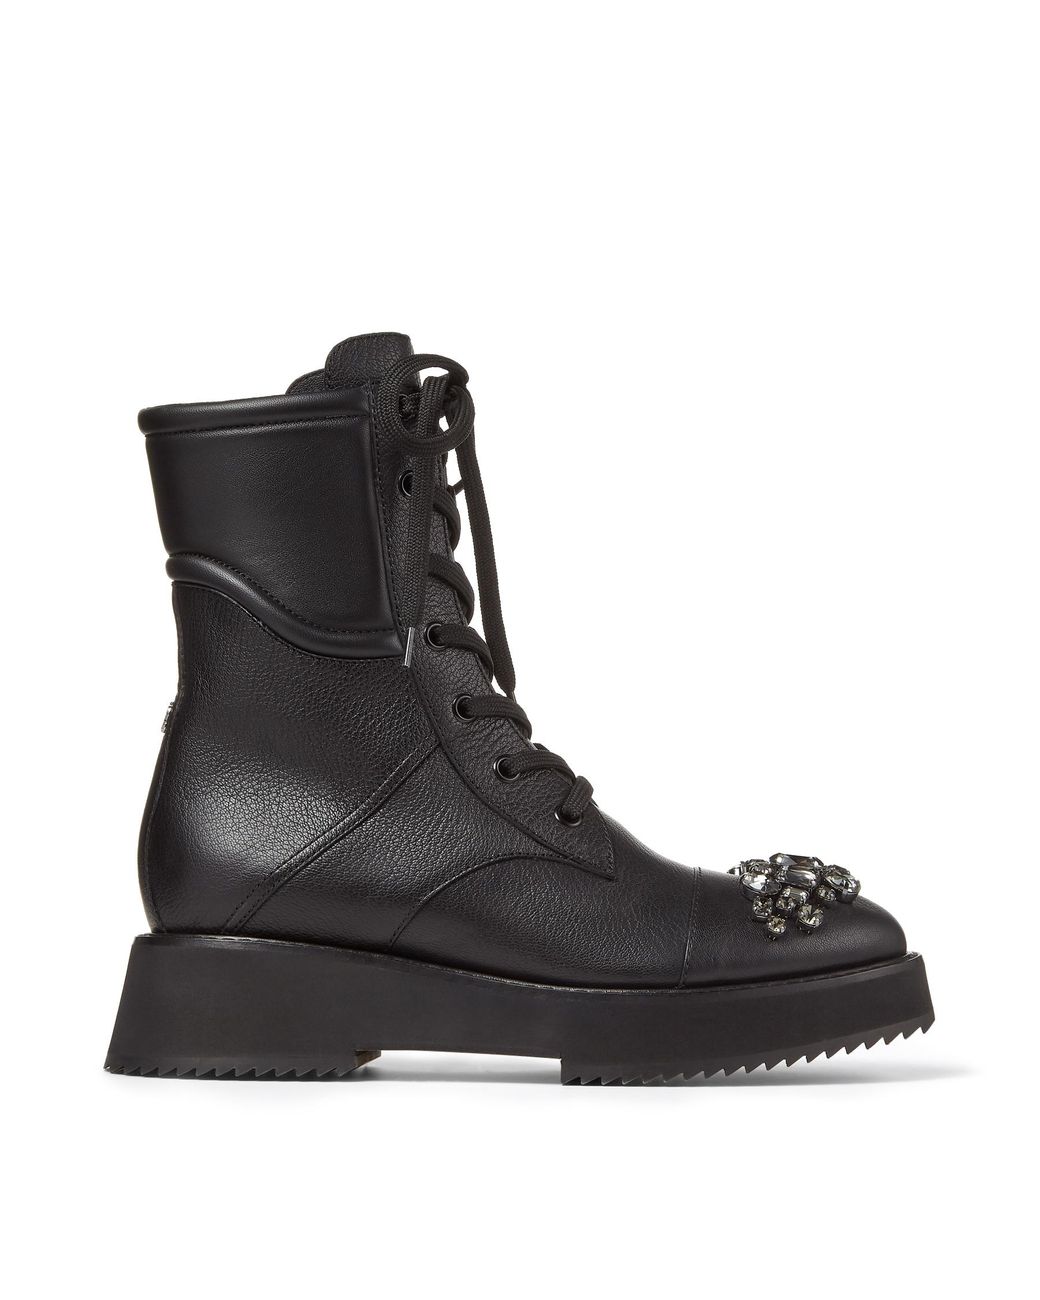 Jimmy Choo Hadley Flat Leather Ankle Boots in Black/Black Diamond ...